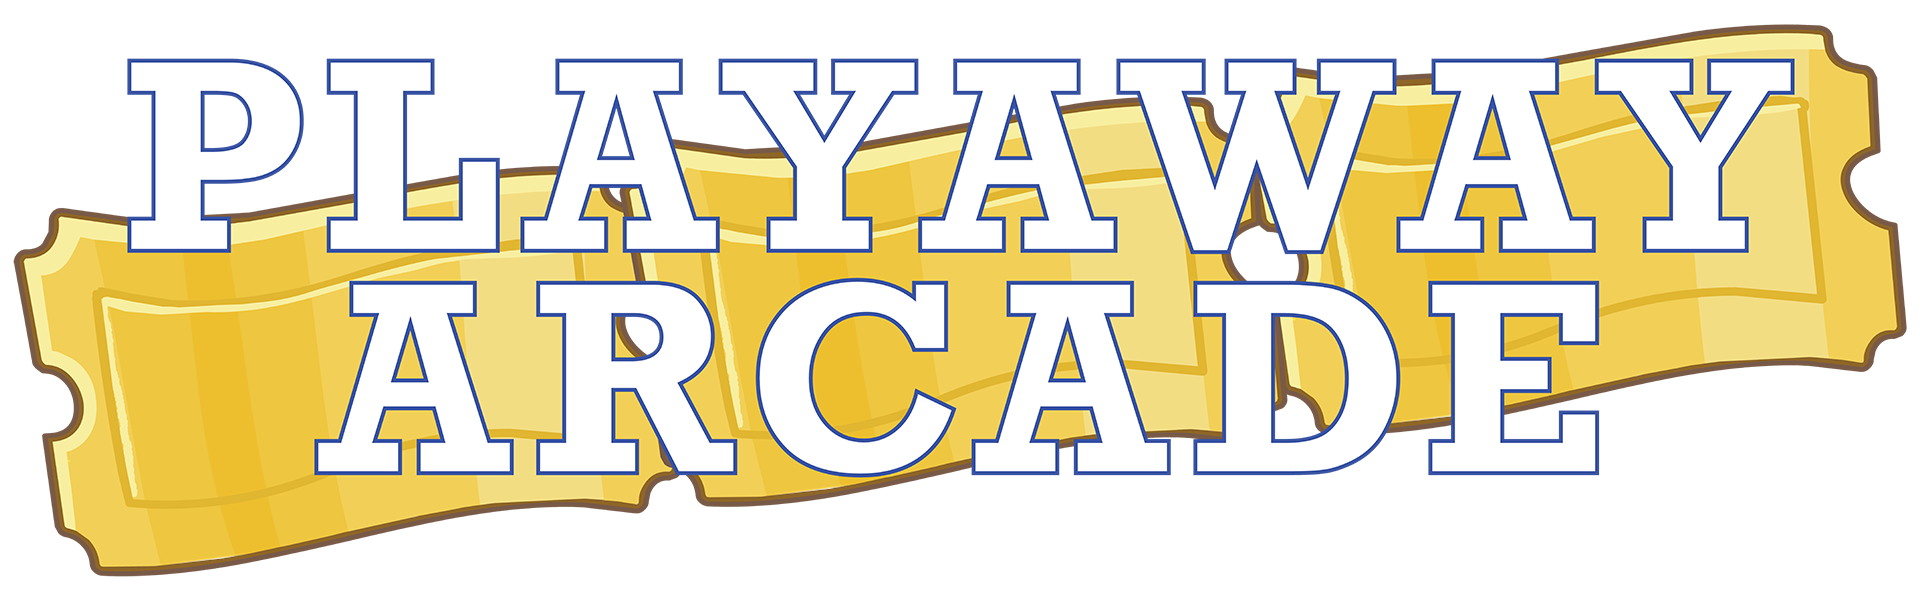 Playaway Arcade logo. Playaway Arcade in text over an image of golden tickets.